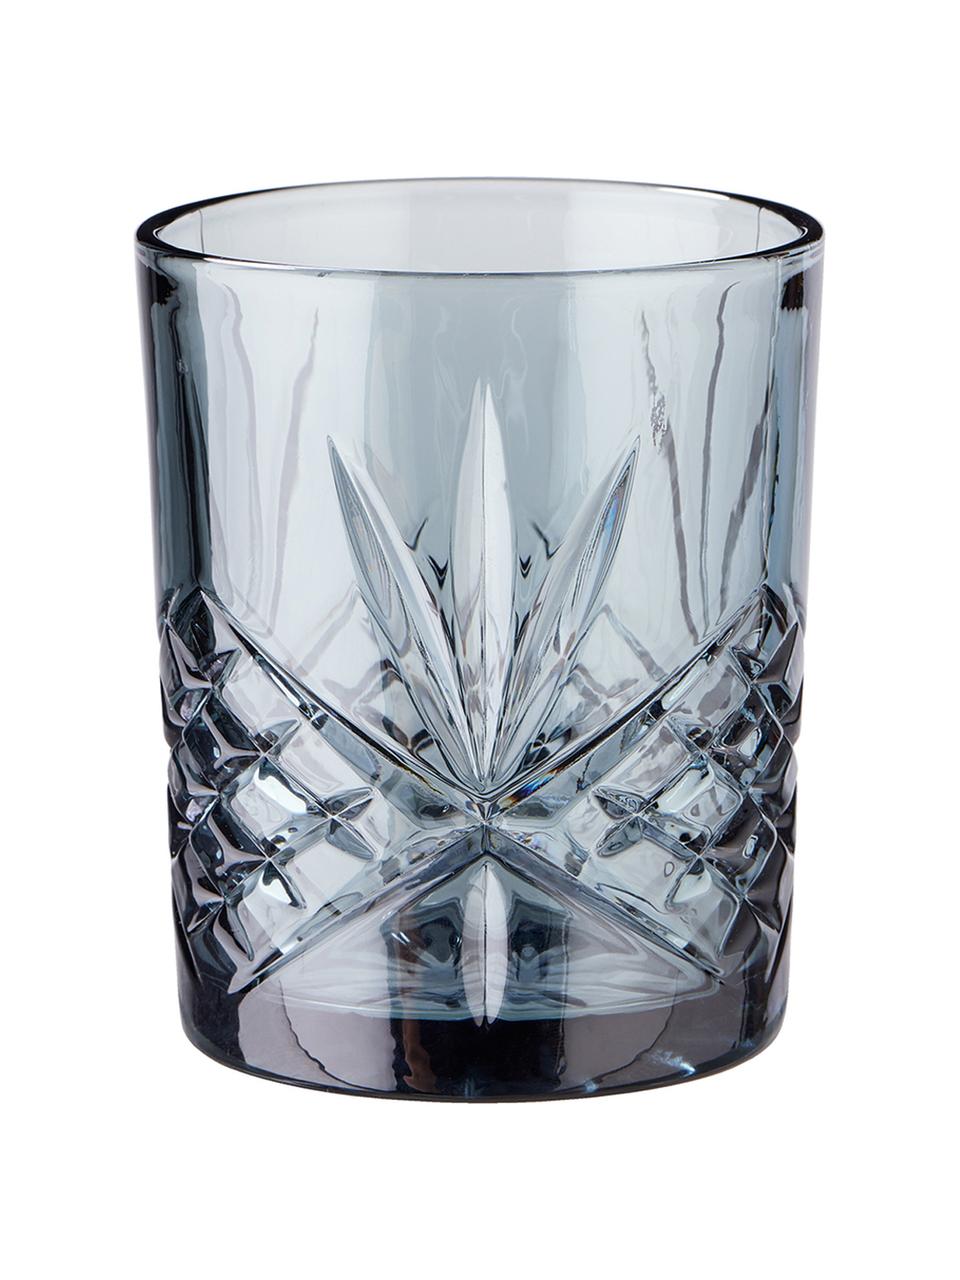 Gläser Crystal Club in Grau mit Kristallrelief, 4 Stück, Glas, Grau, Ø 8 x H 10 cm, 300 ml